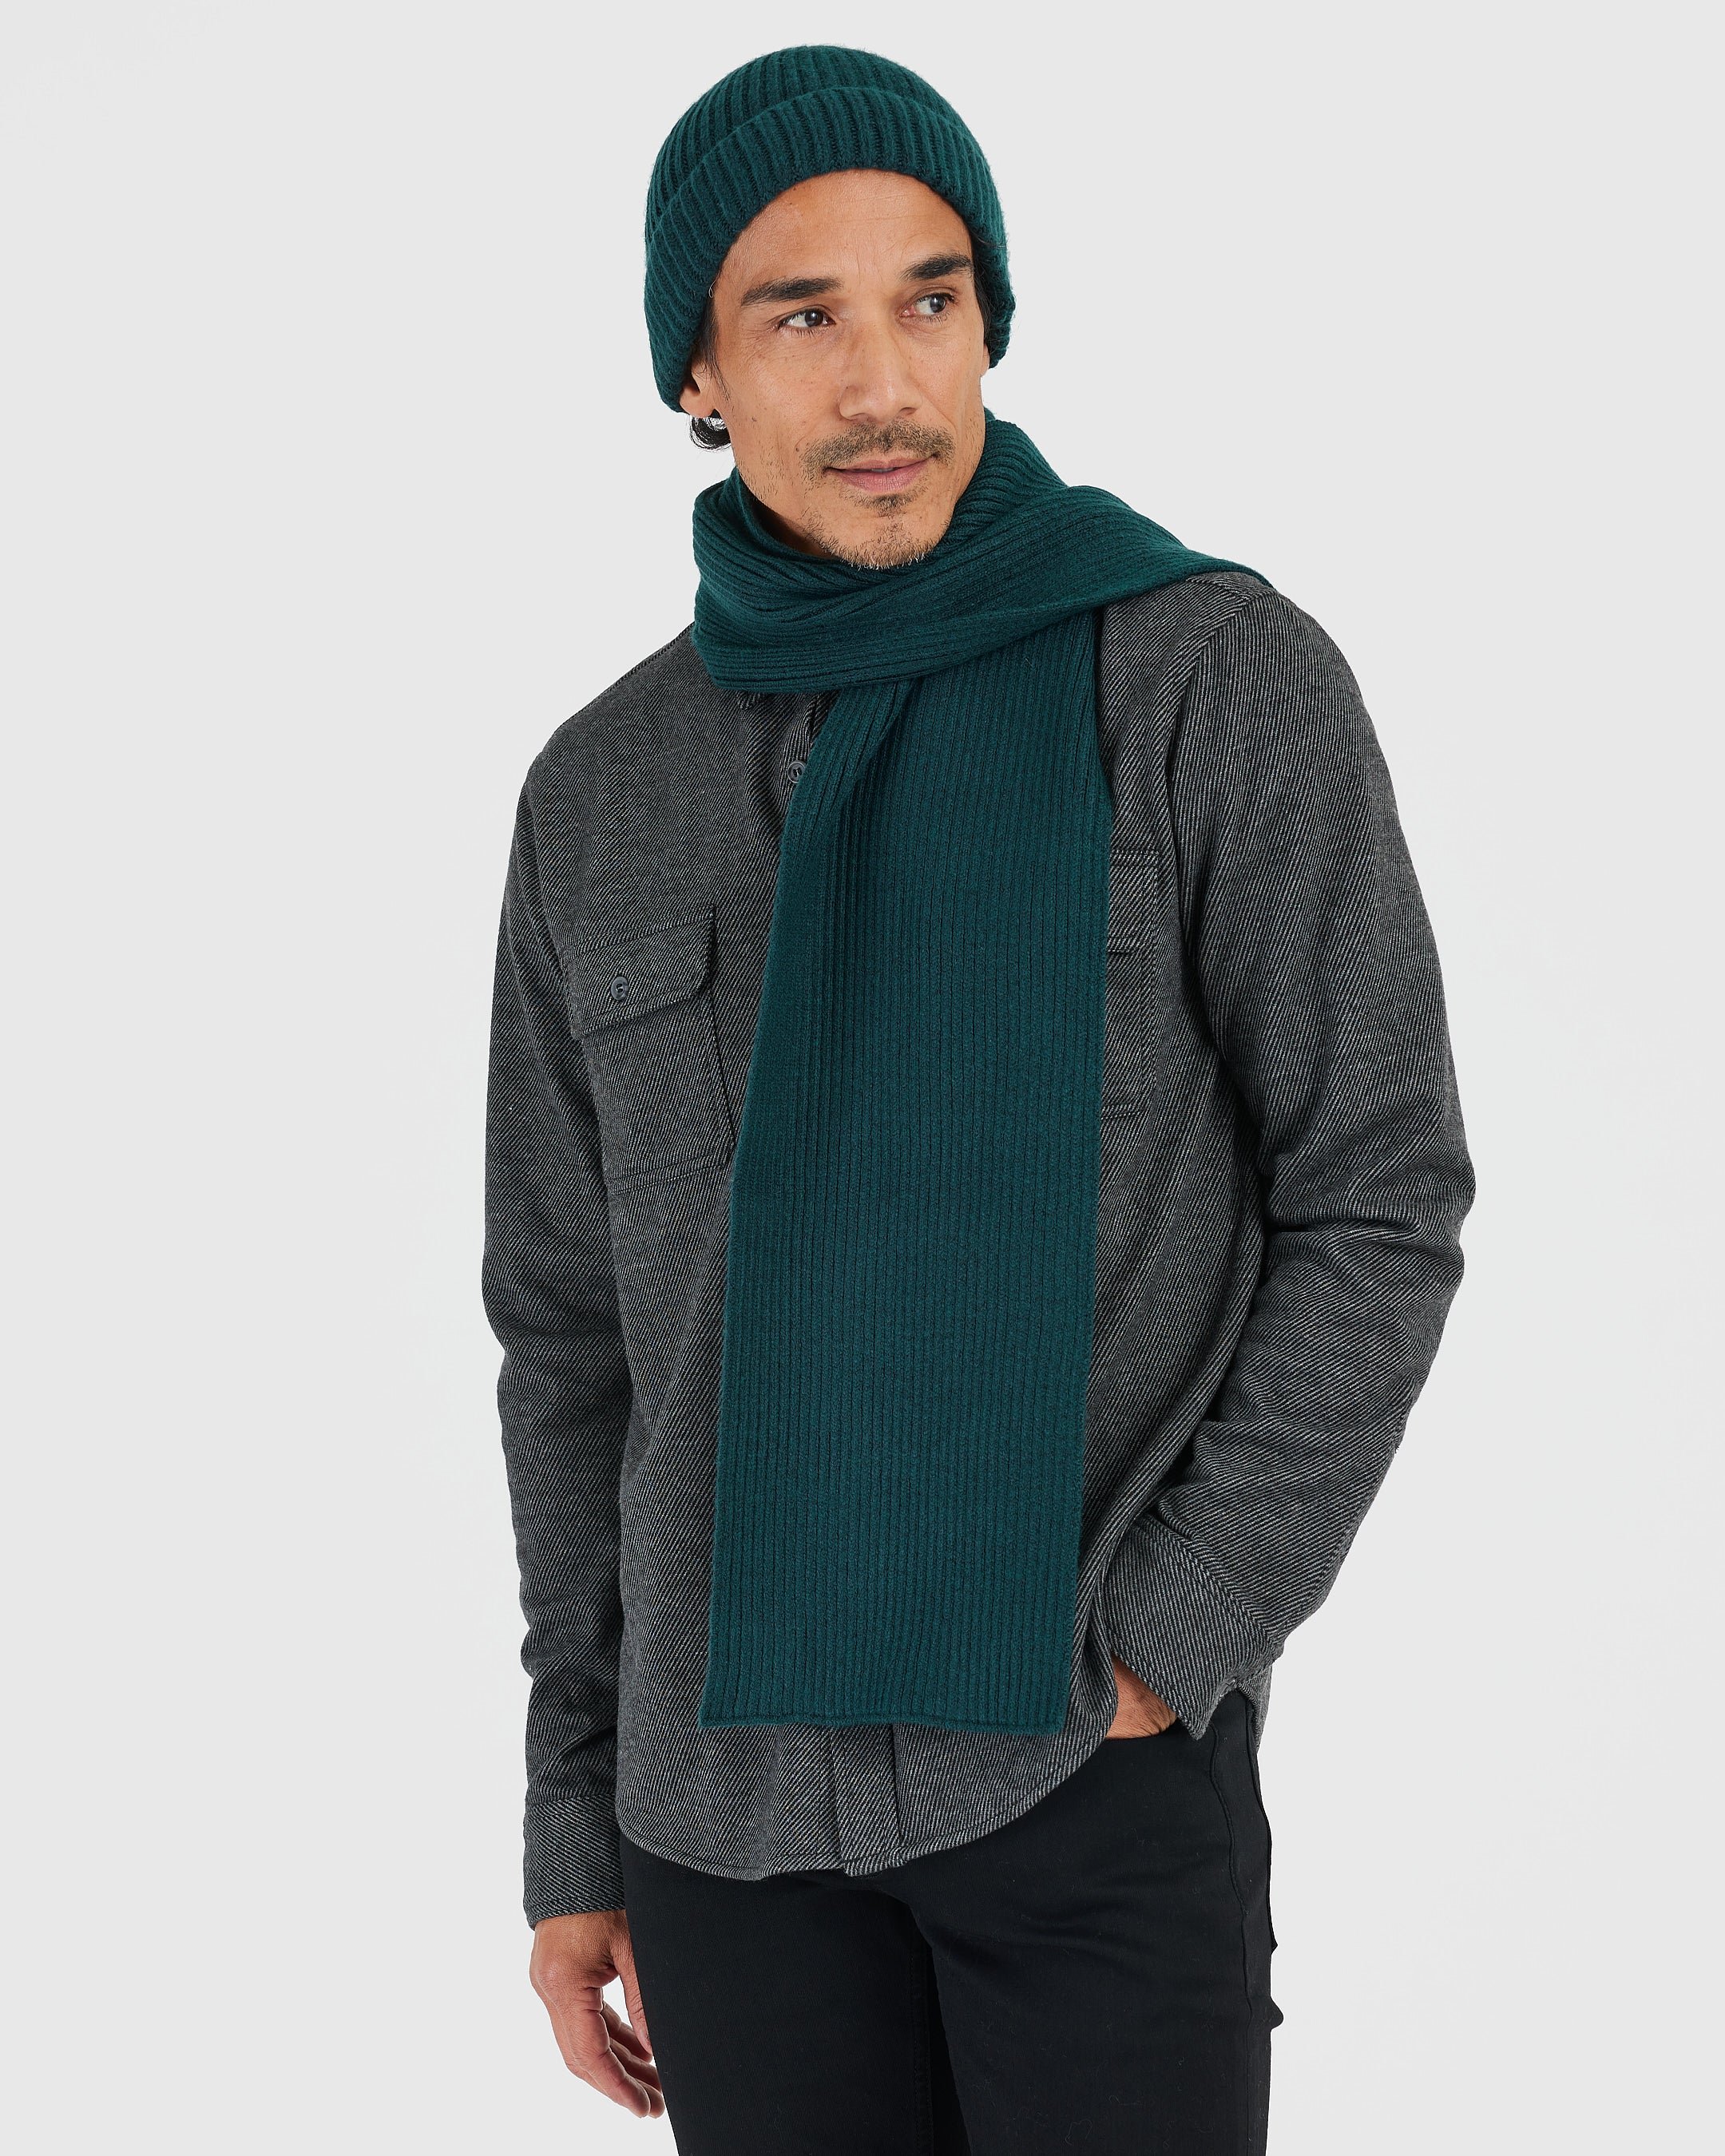 Evergreen Sweater Scarf